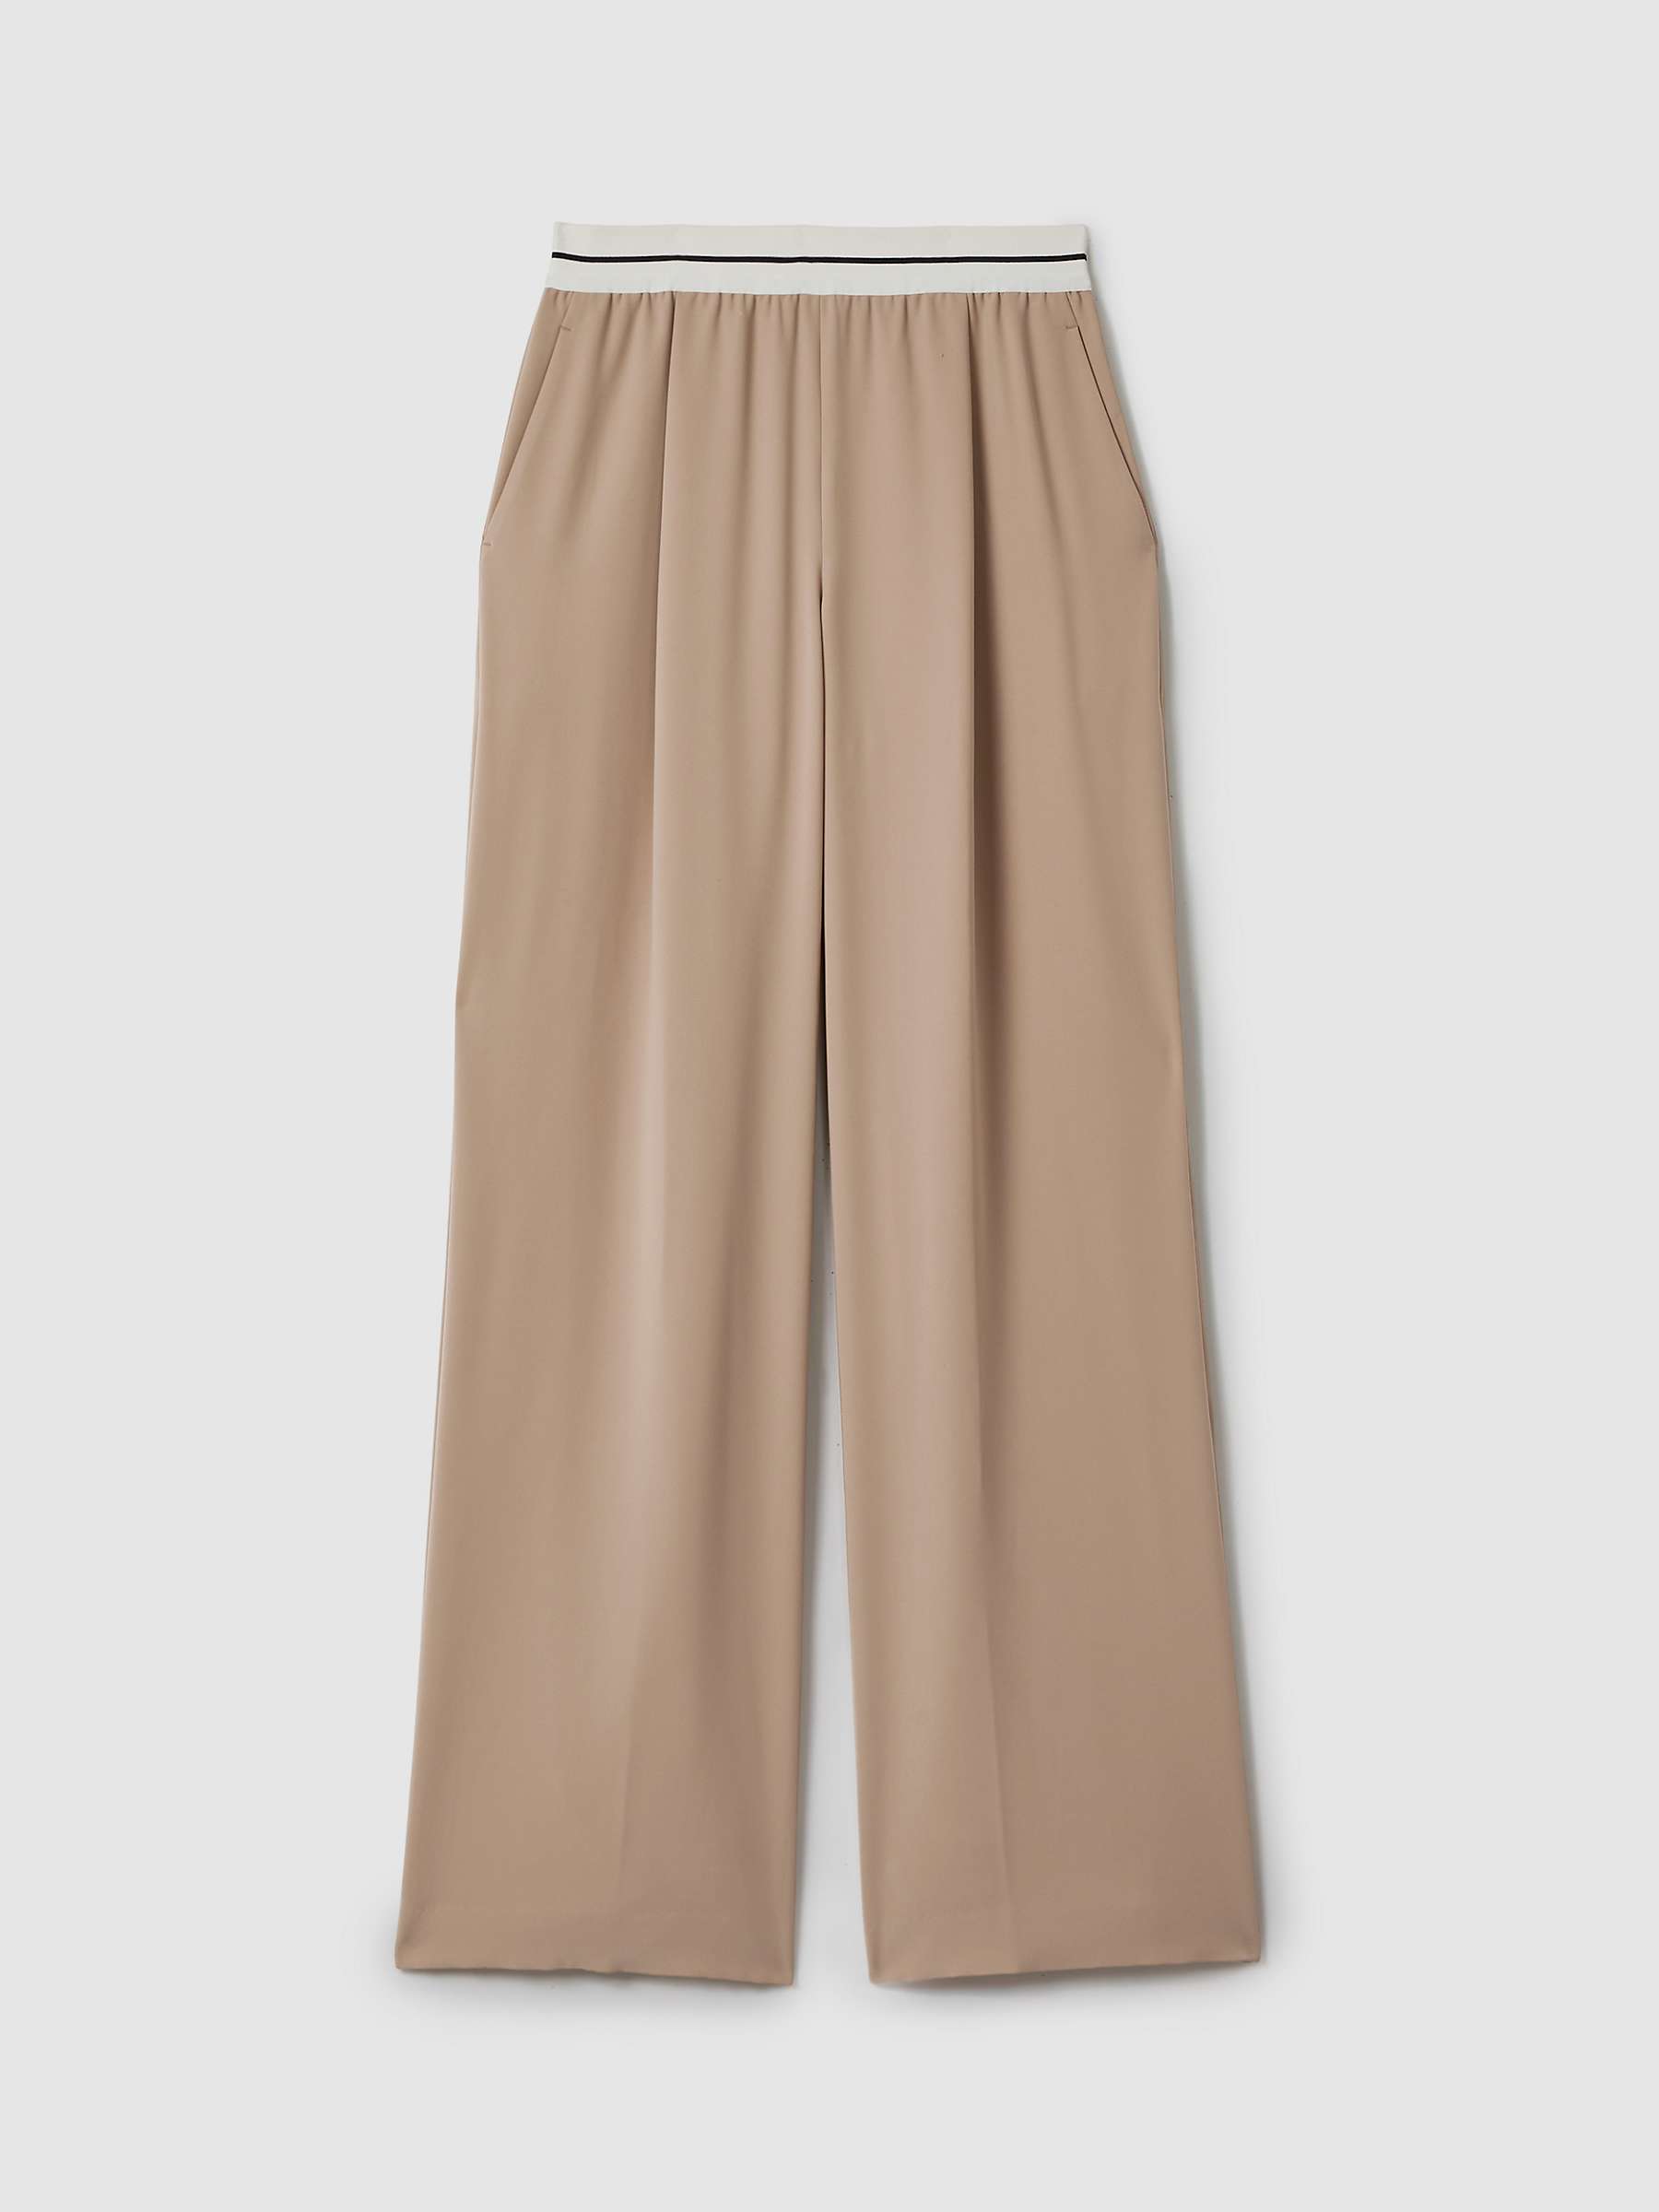 Buy Reiss Petite Abigail Stripe Waistband Trousers Online at johnlewis.com